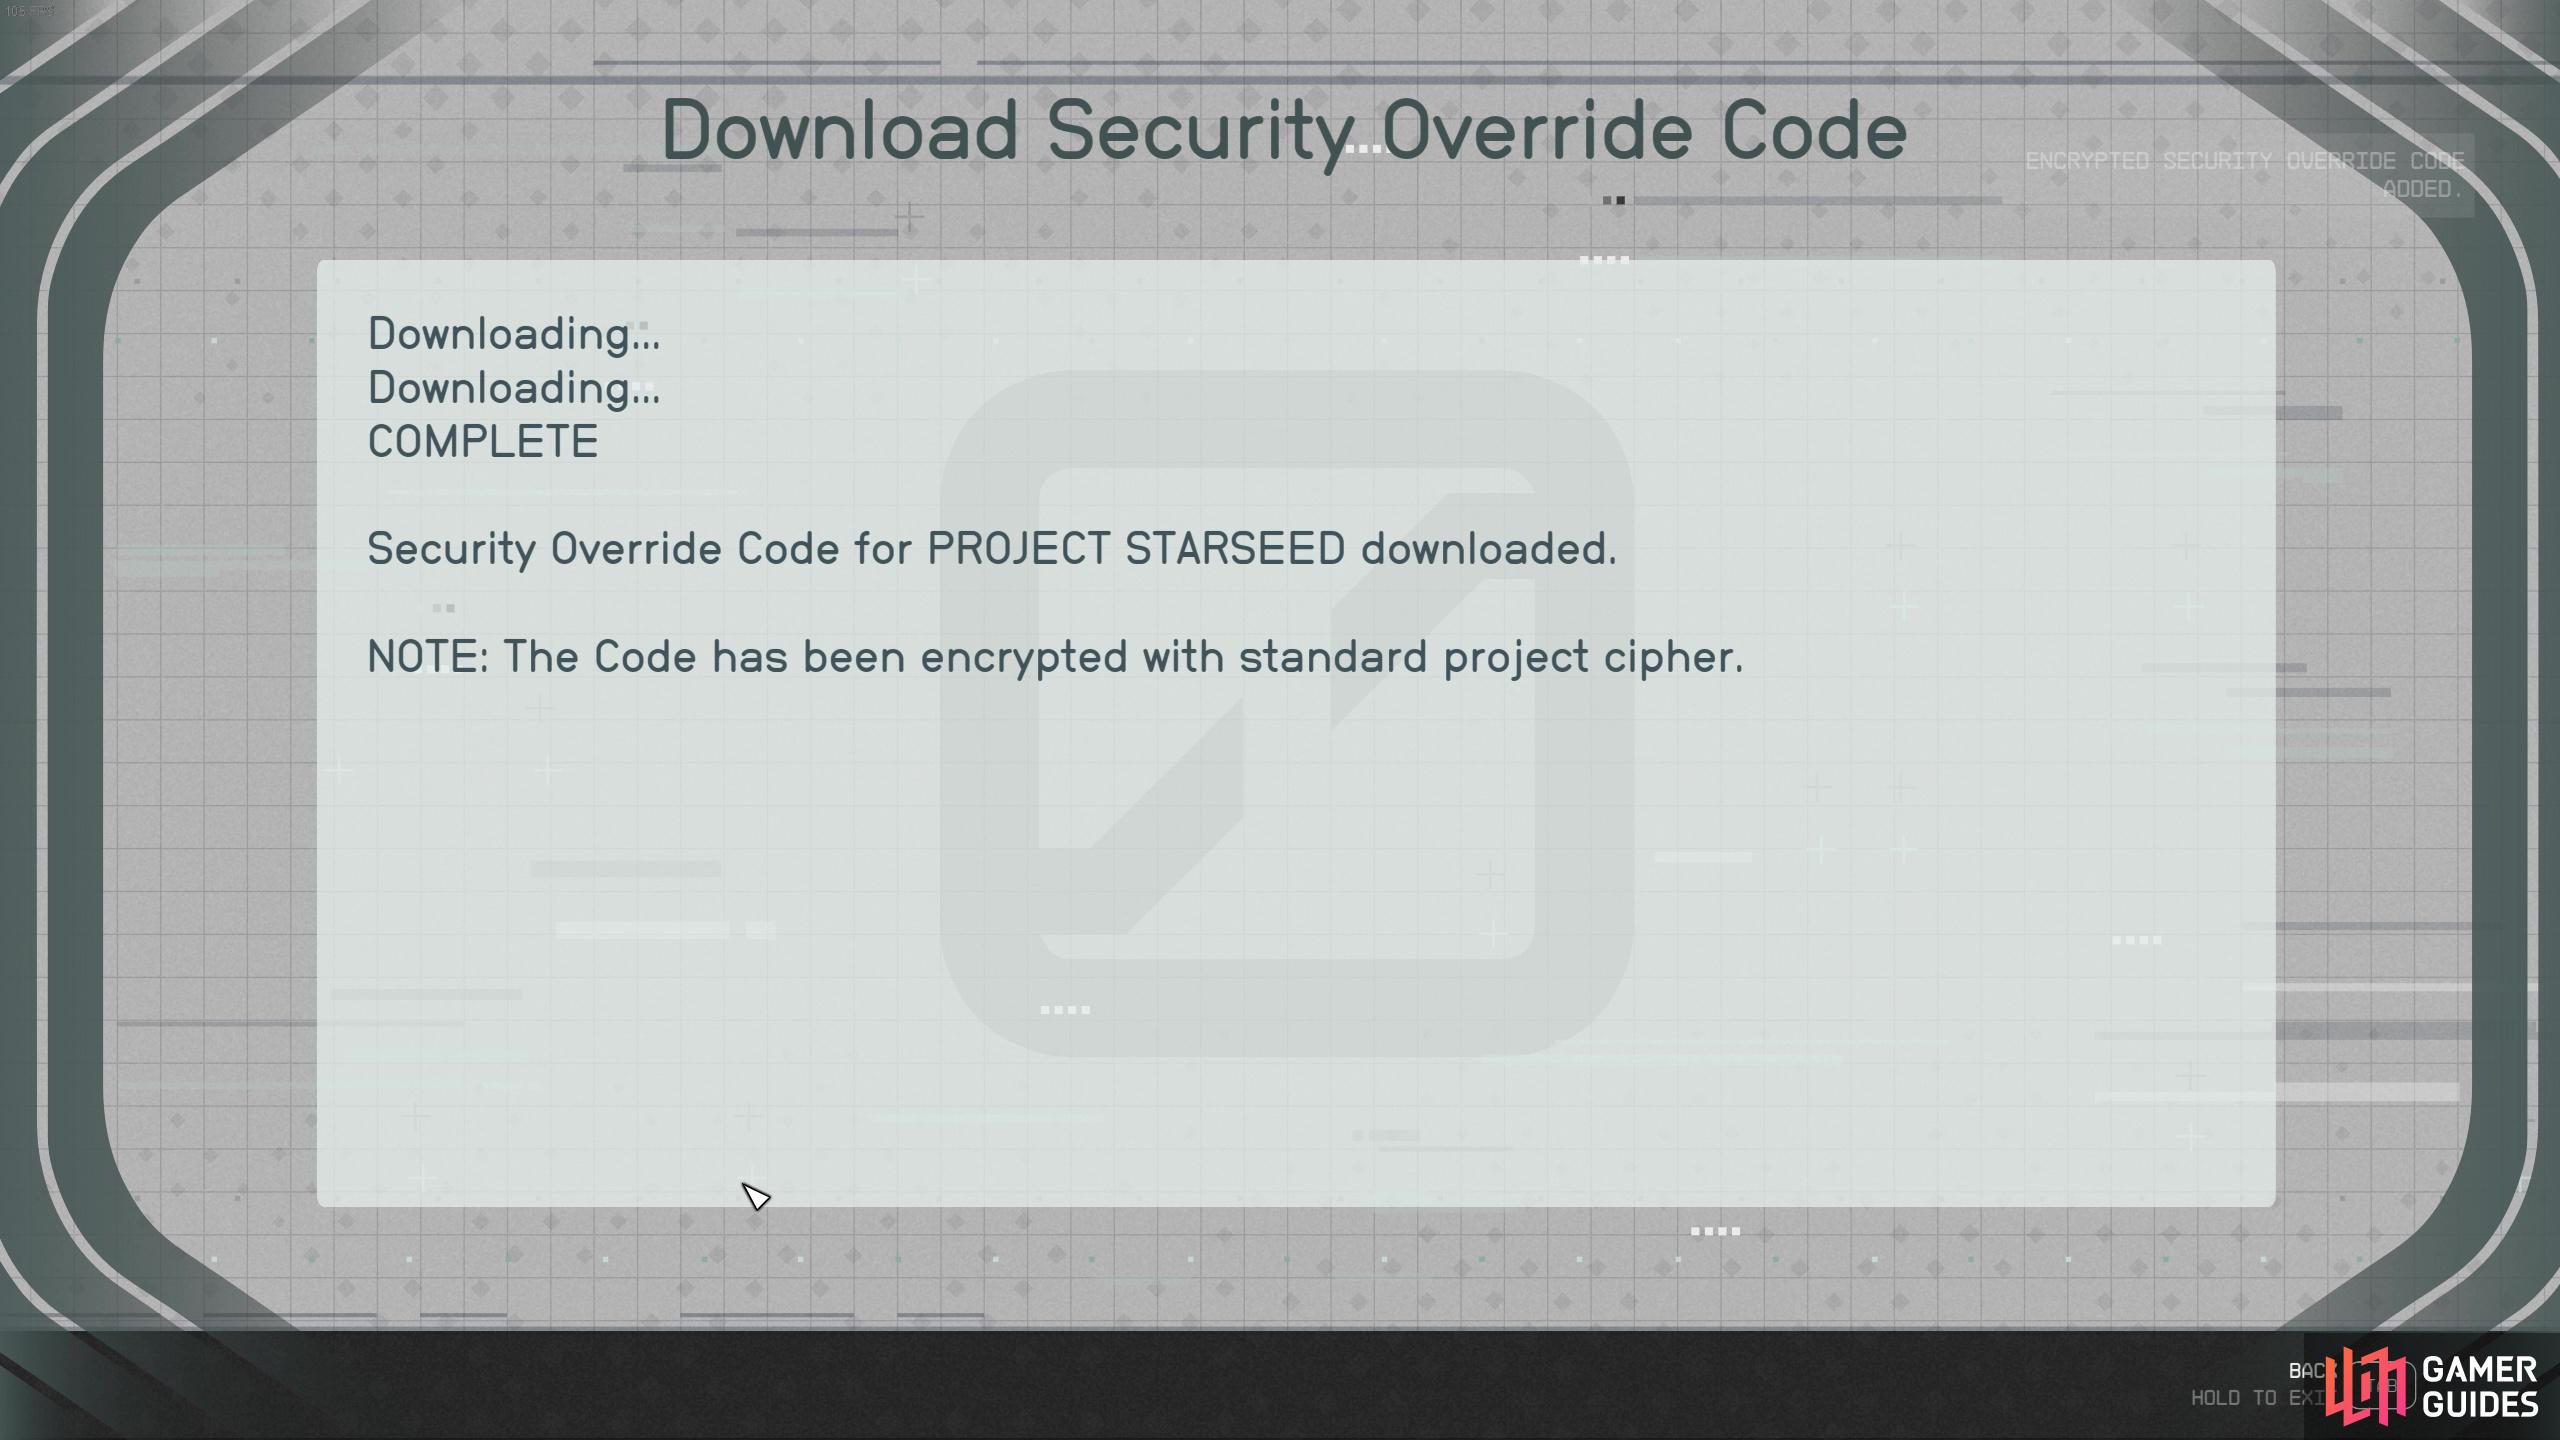 then download the Security Override Code.